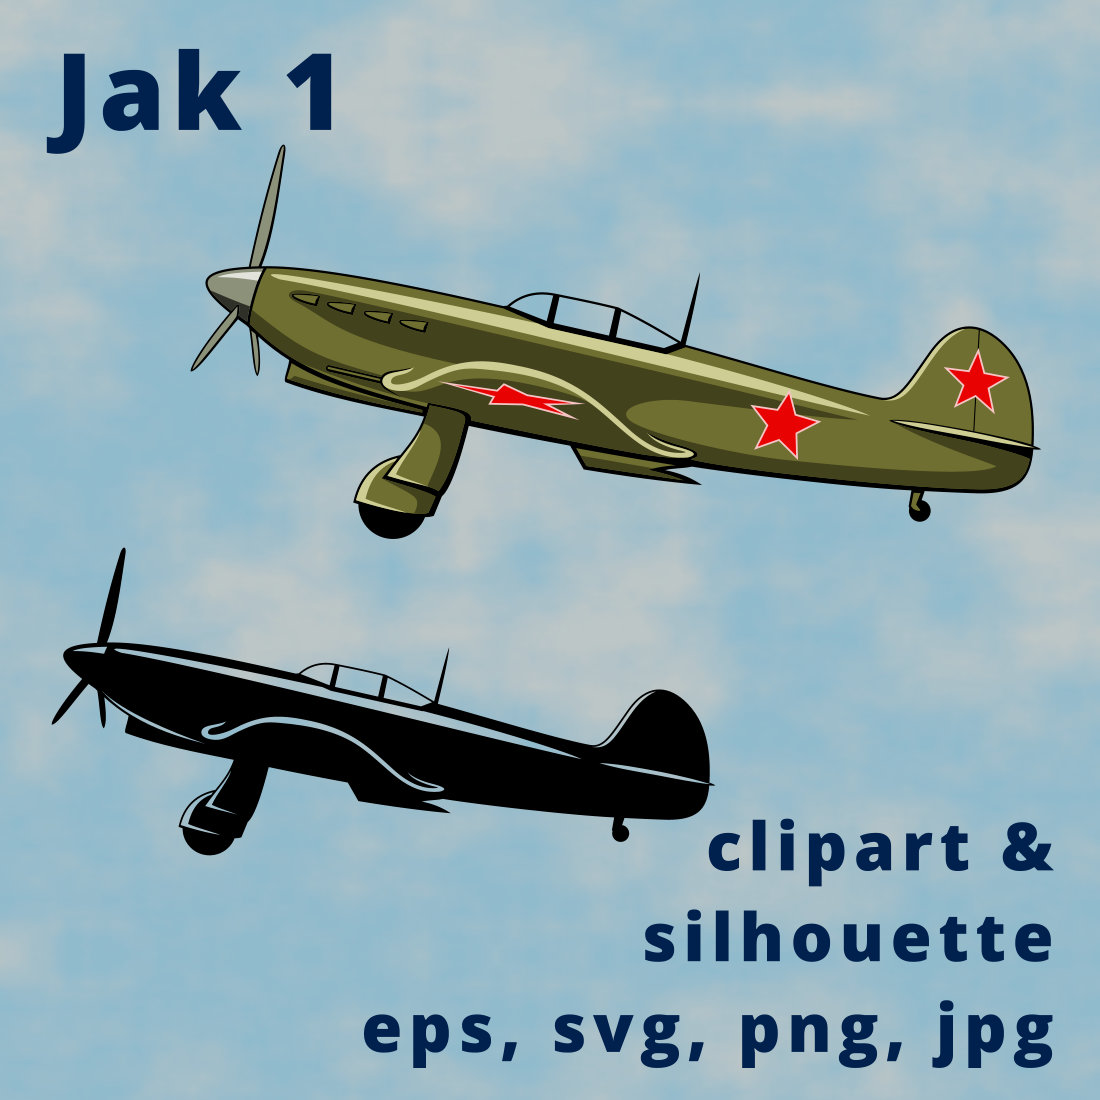 Jak-1 Soviet Fighter Plane Clipart cover image.